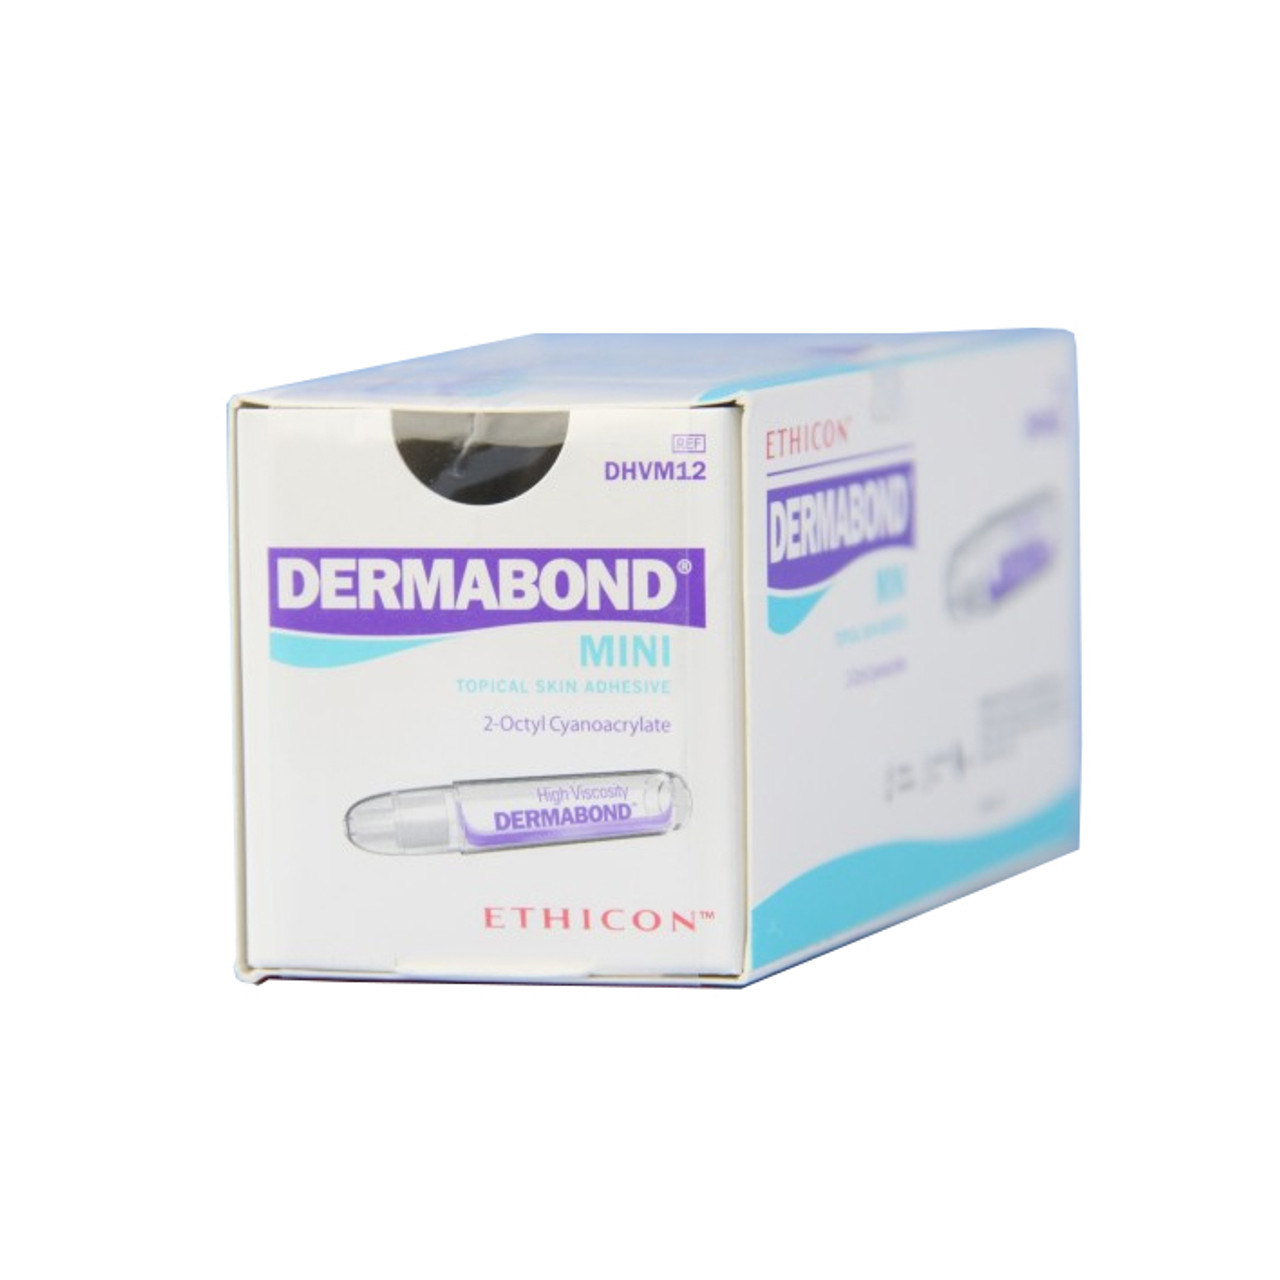 DERMABOND ADVANCED® Topical Skin Glues & Adhesives